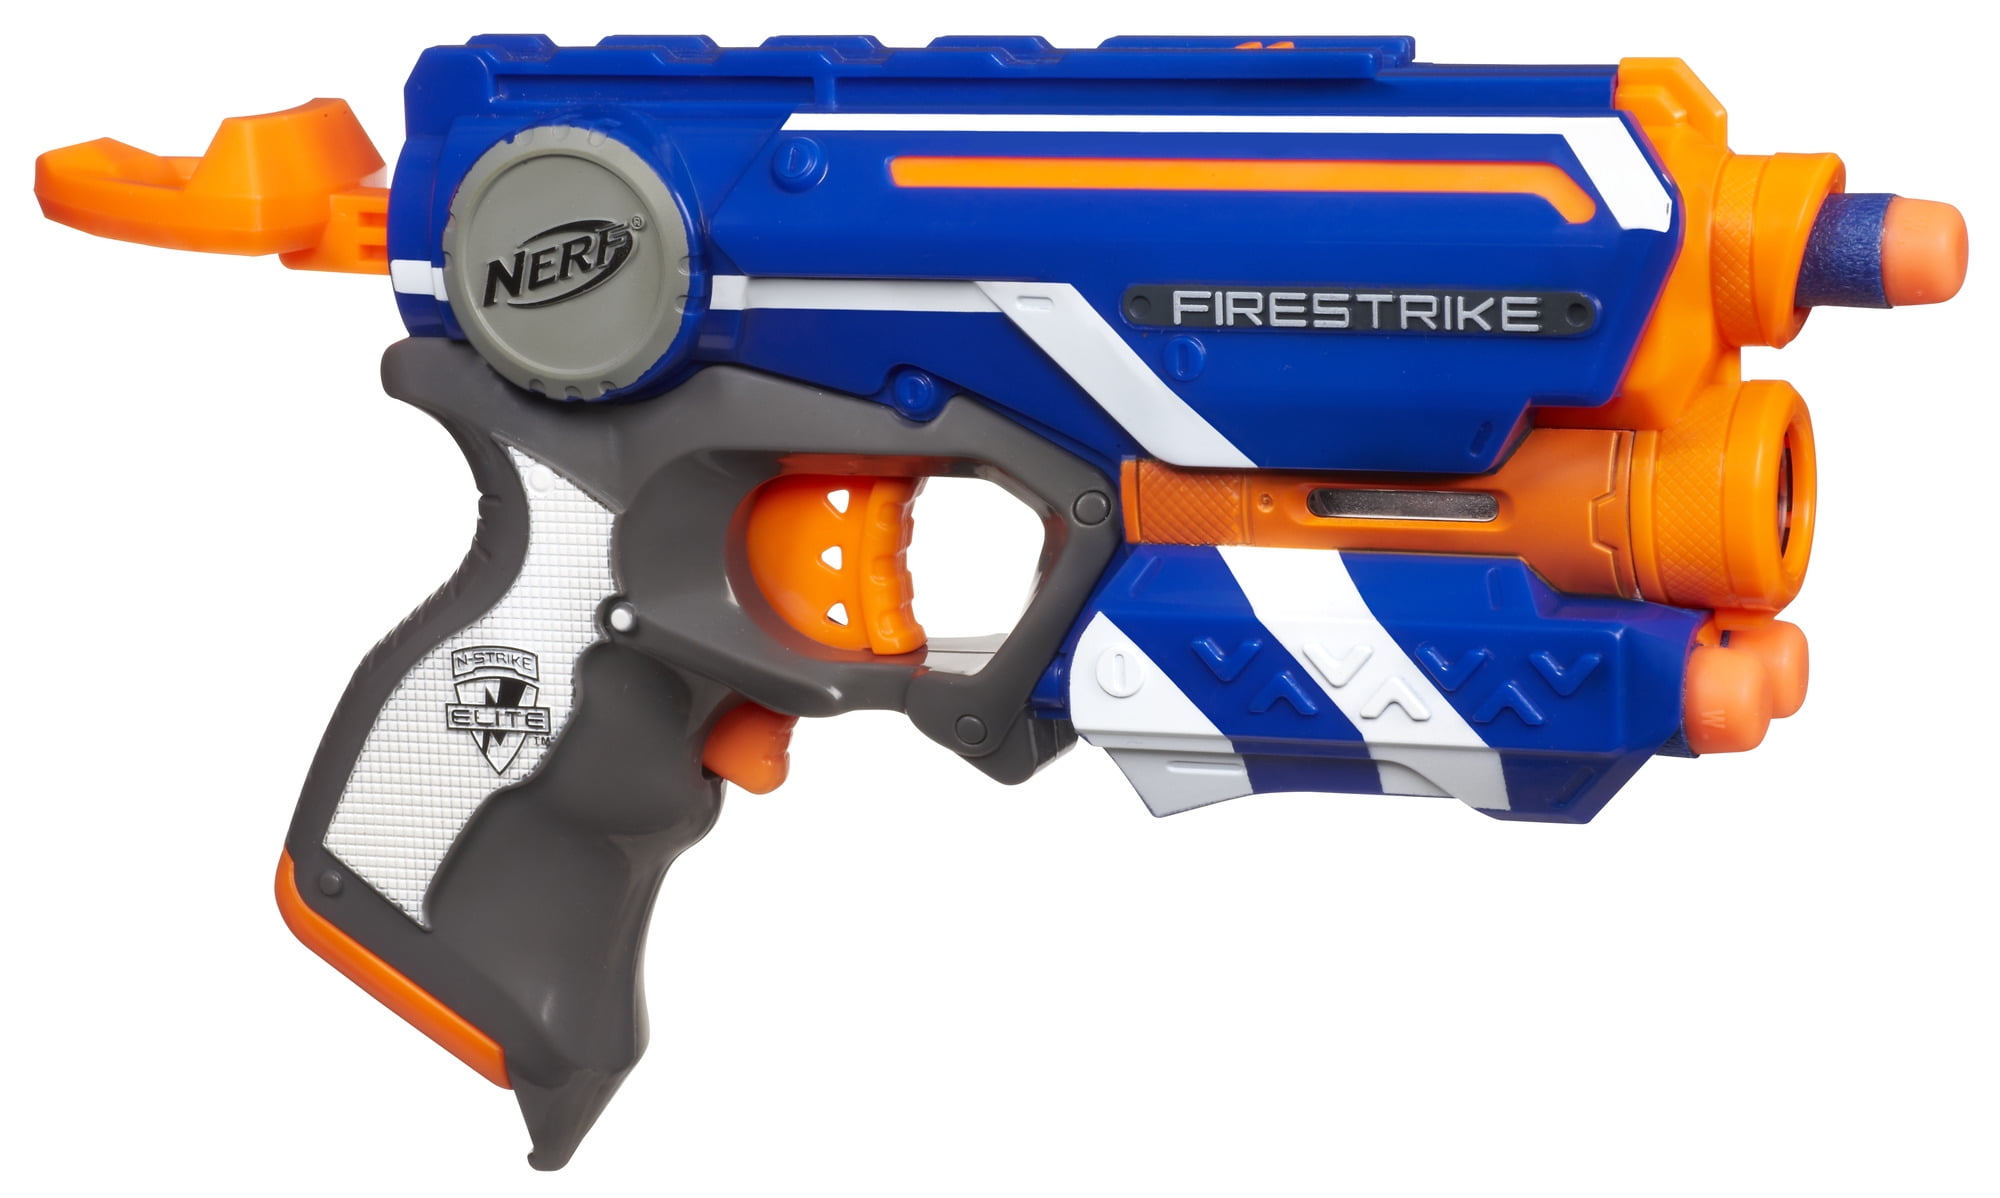 NERF N-strike Firestrike Blaster -